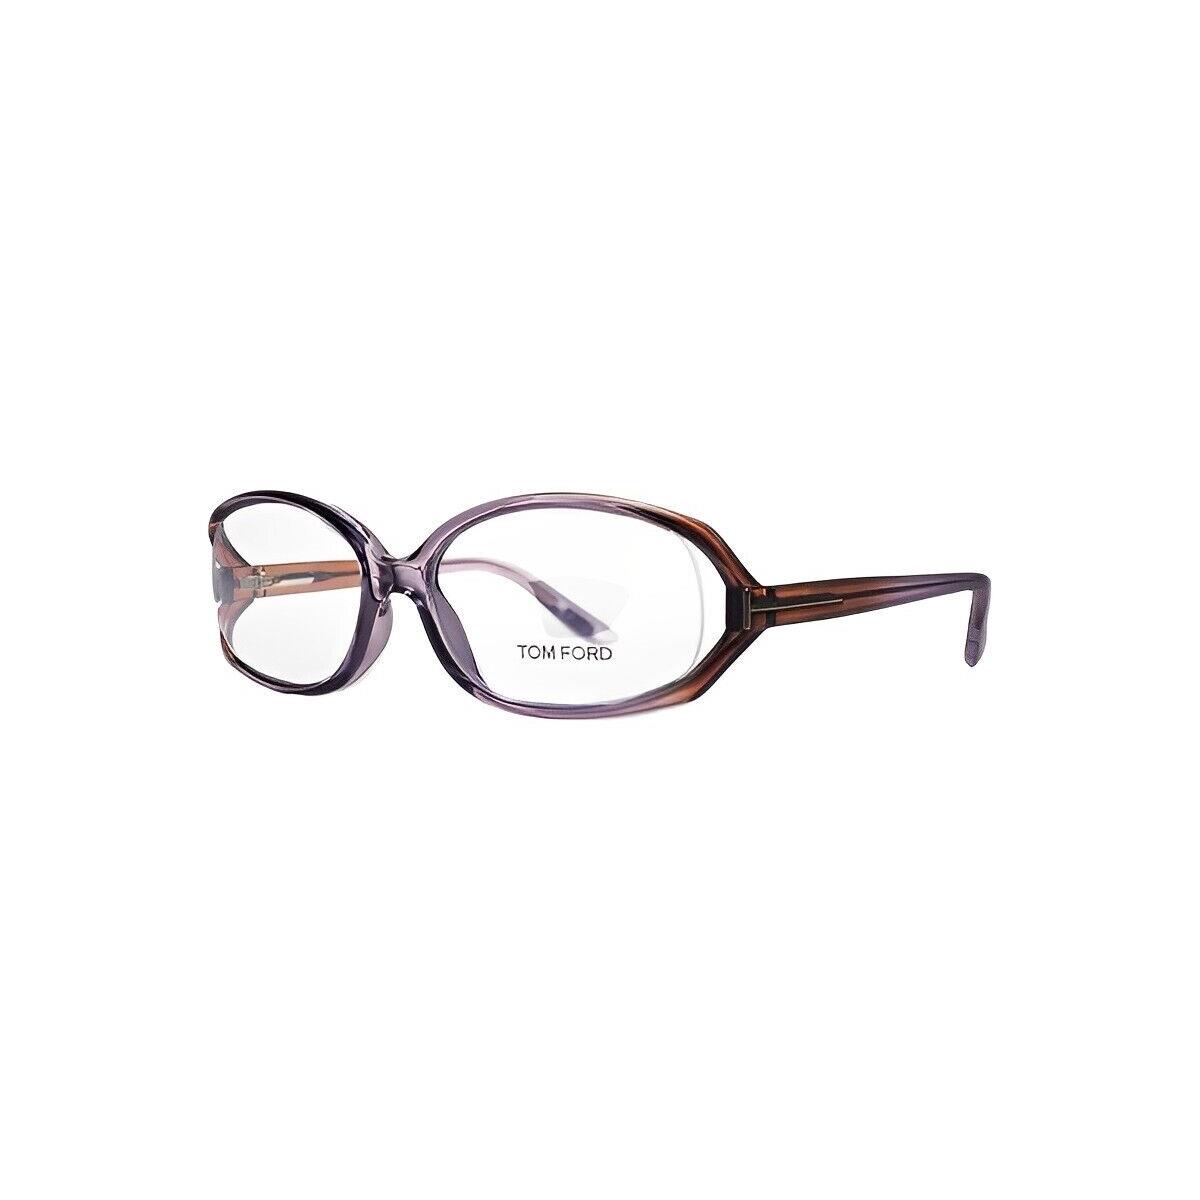 Tom Ford Eyeglasses W/soft Case - FT 186/V 080 - Brown Purple 55-16-130